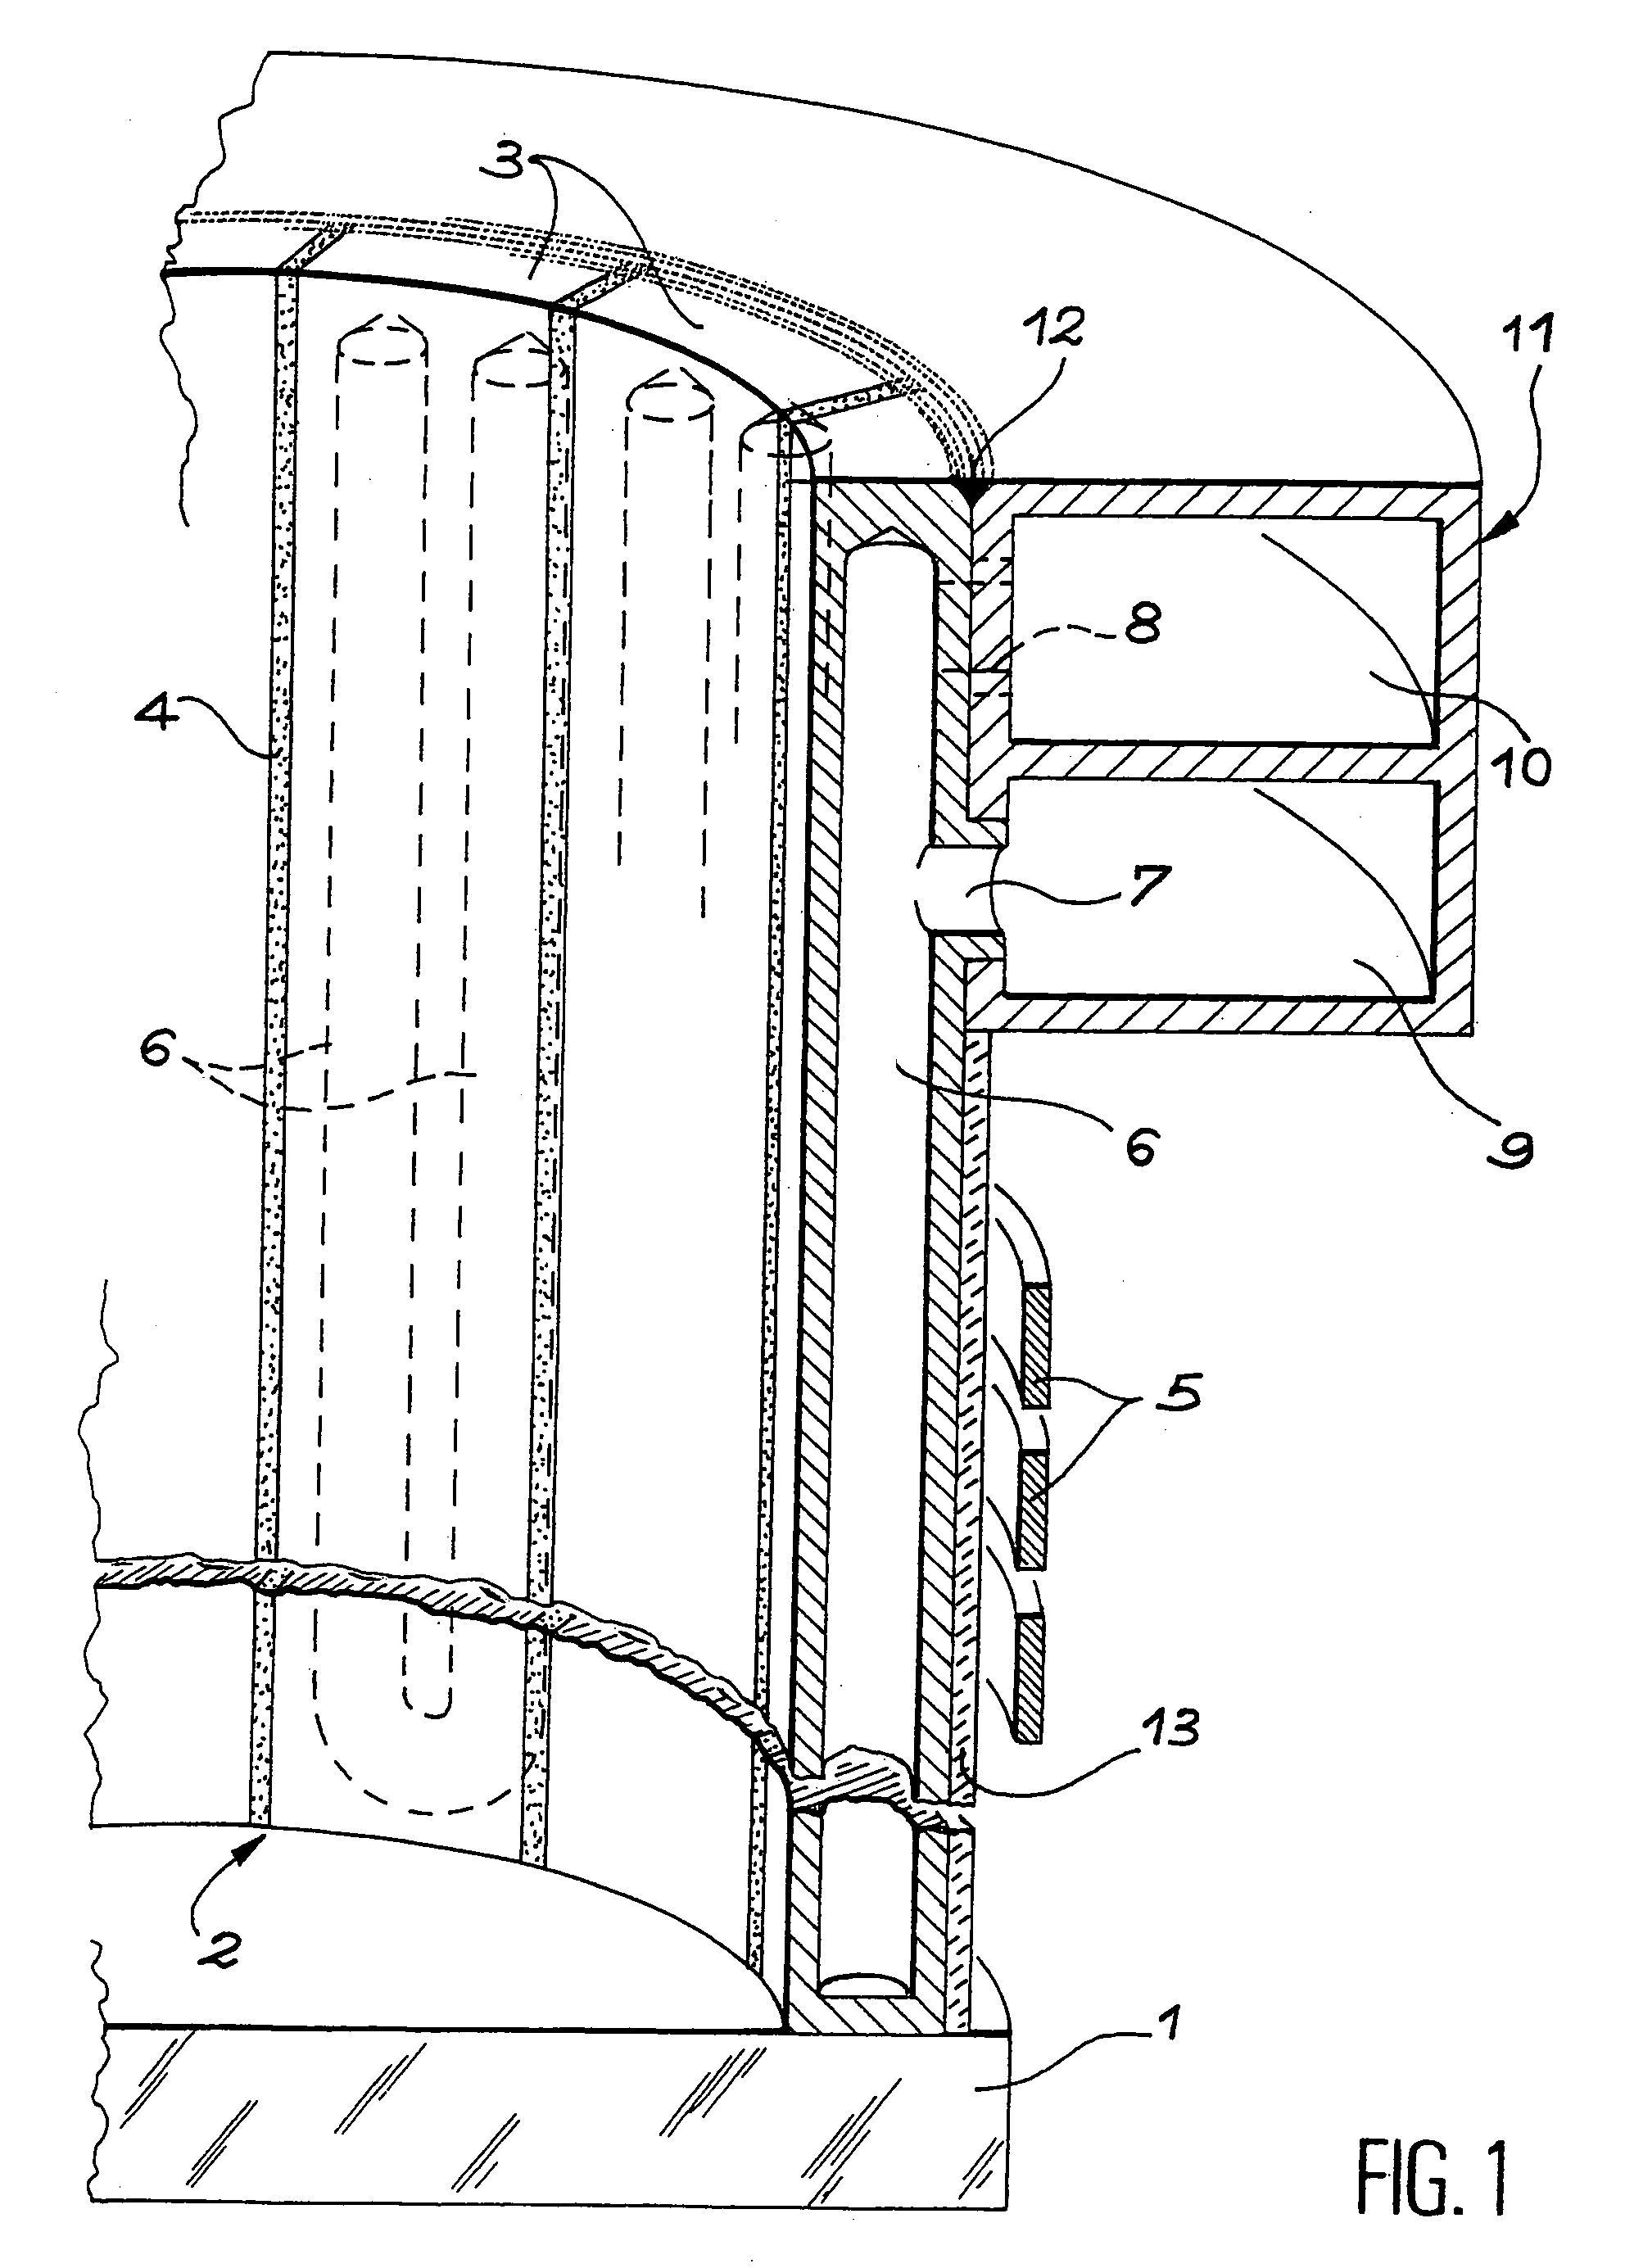 Core-type furnace